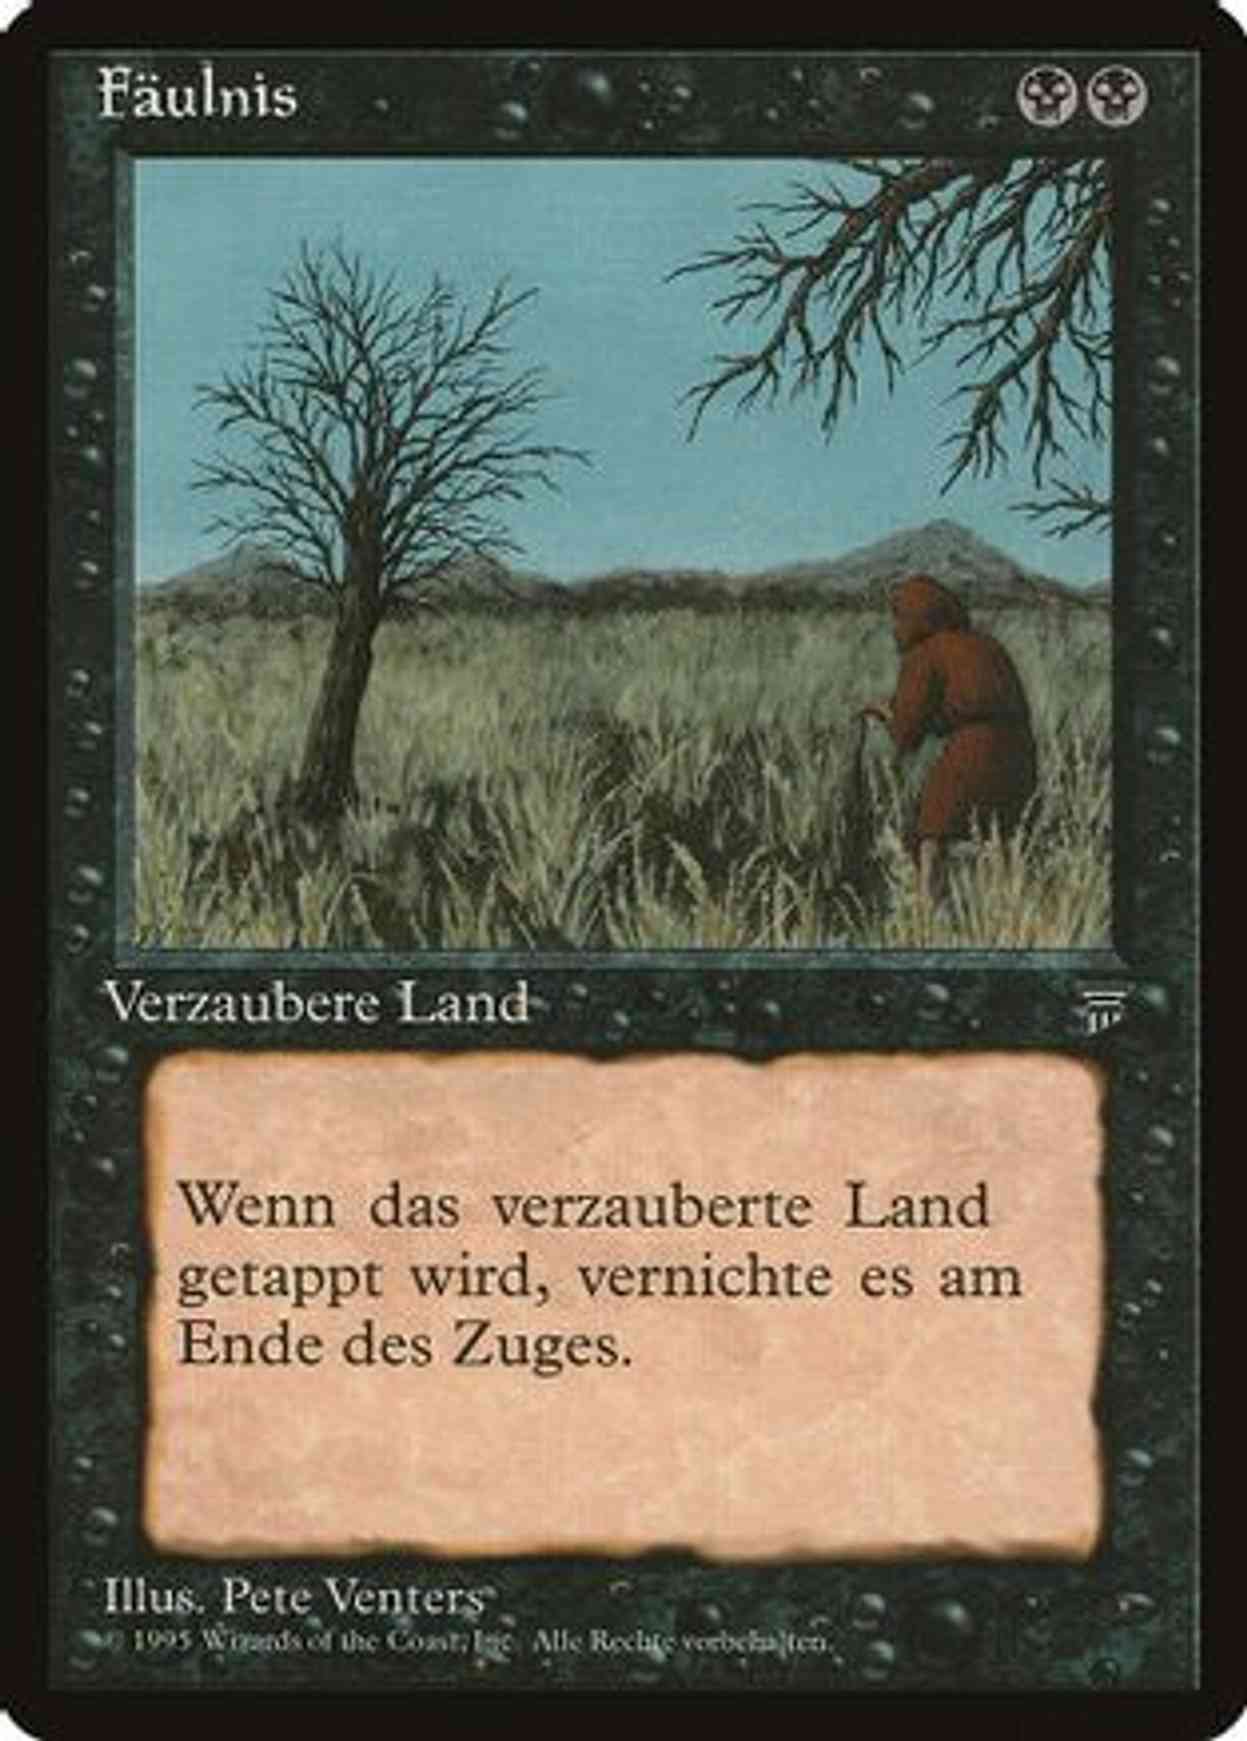 Blight (German) - "Faulnis" magic card front